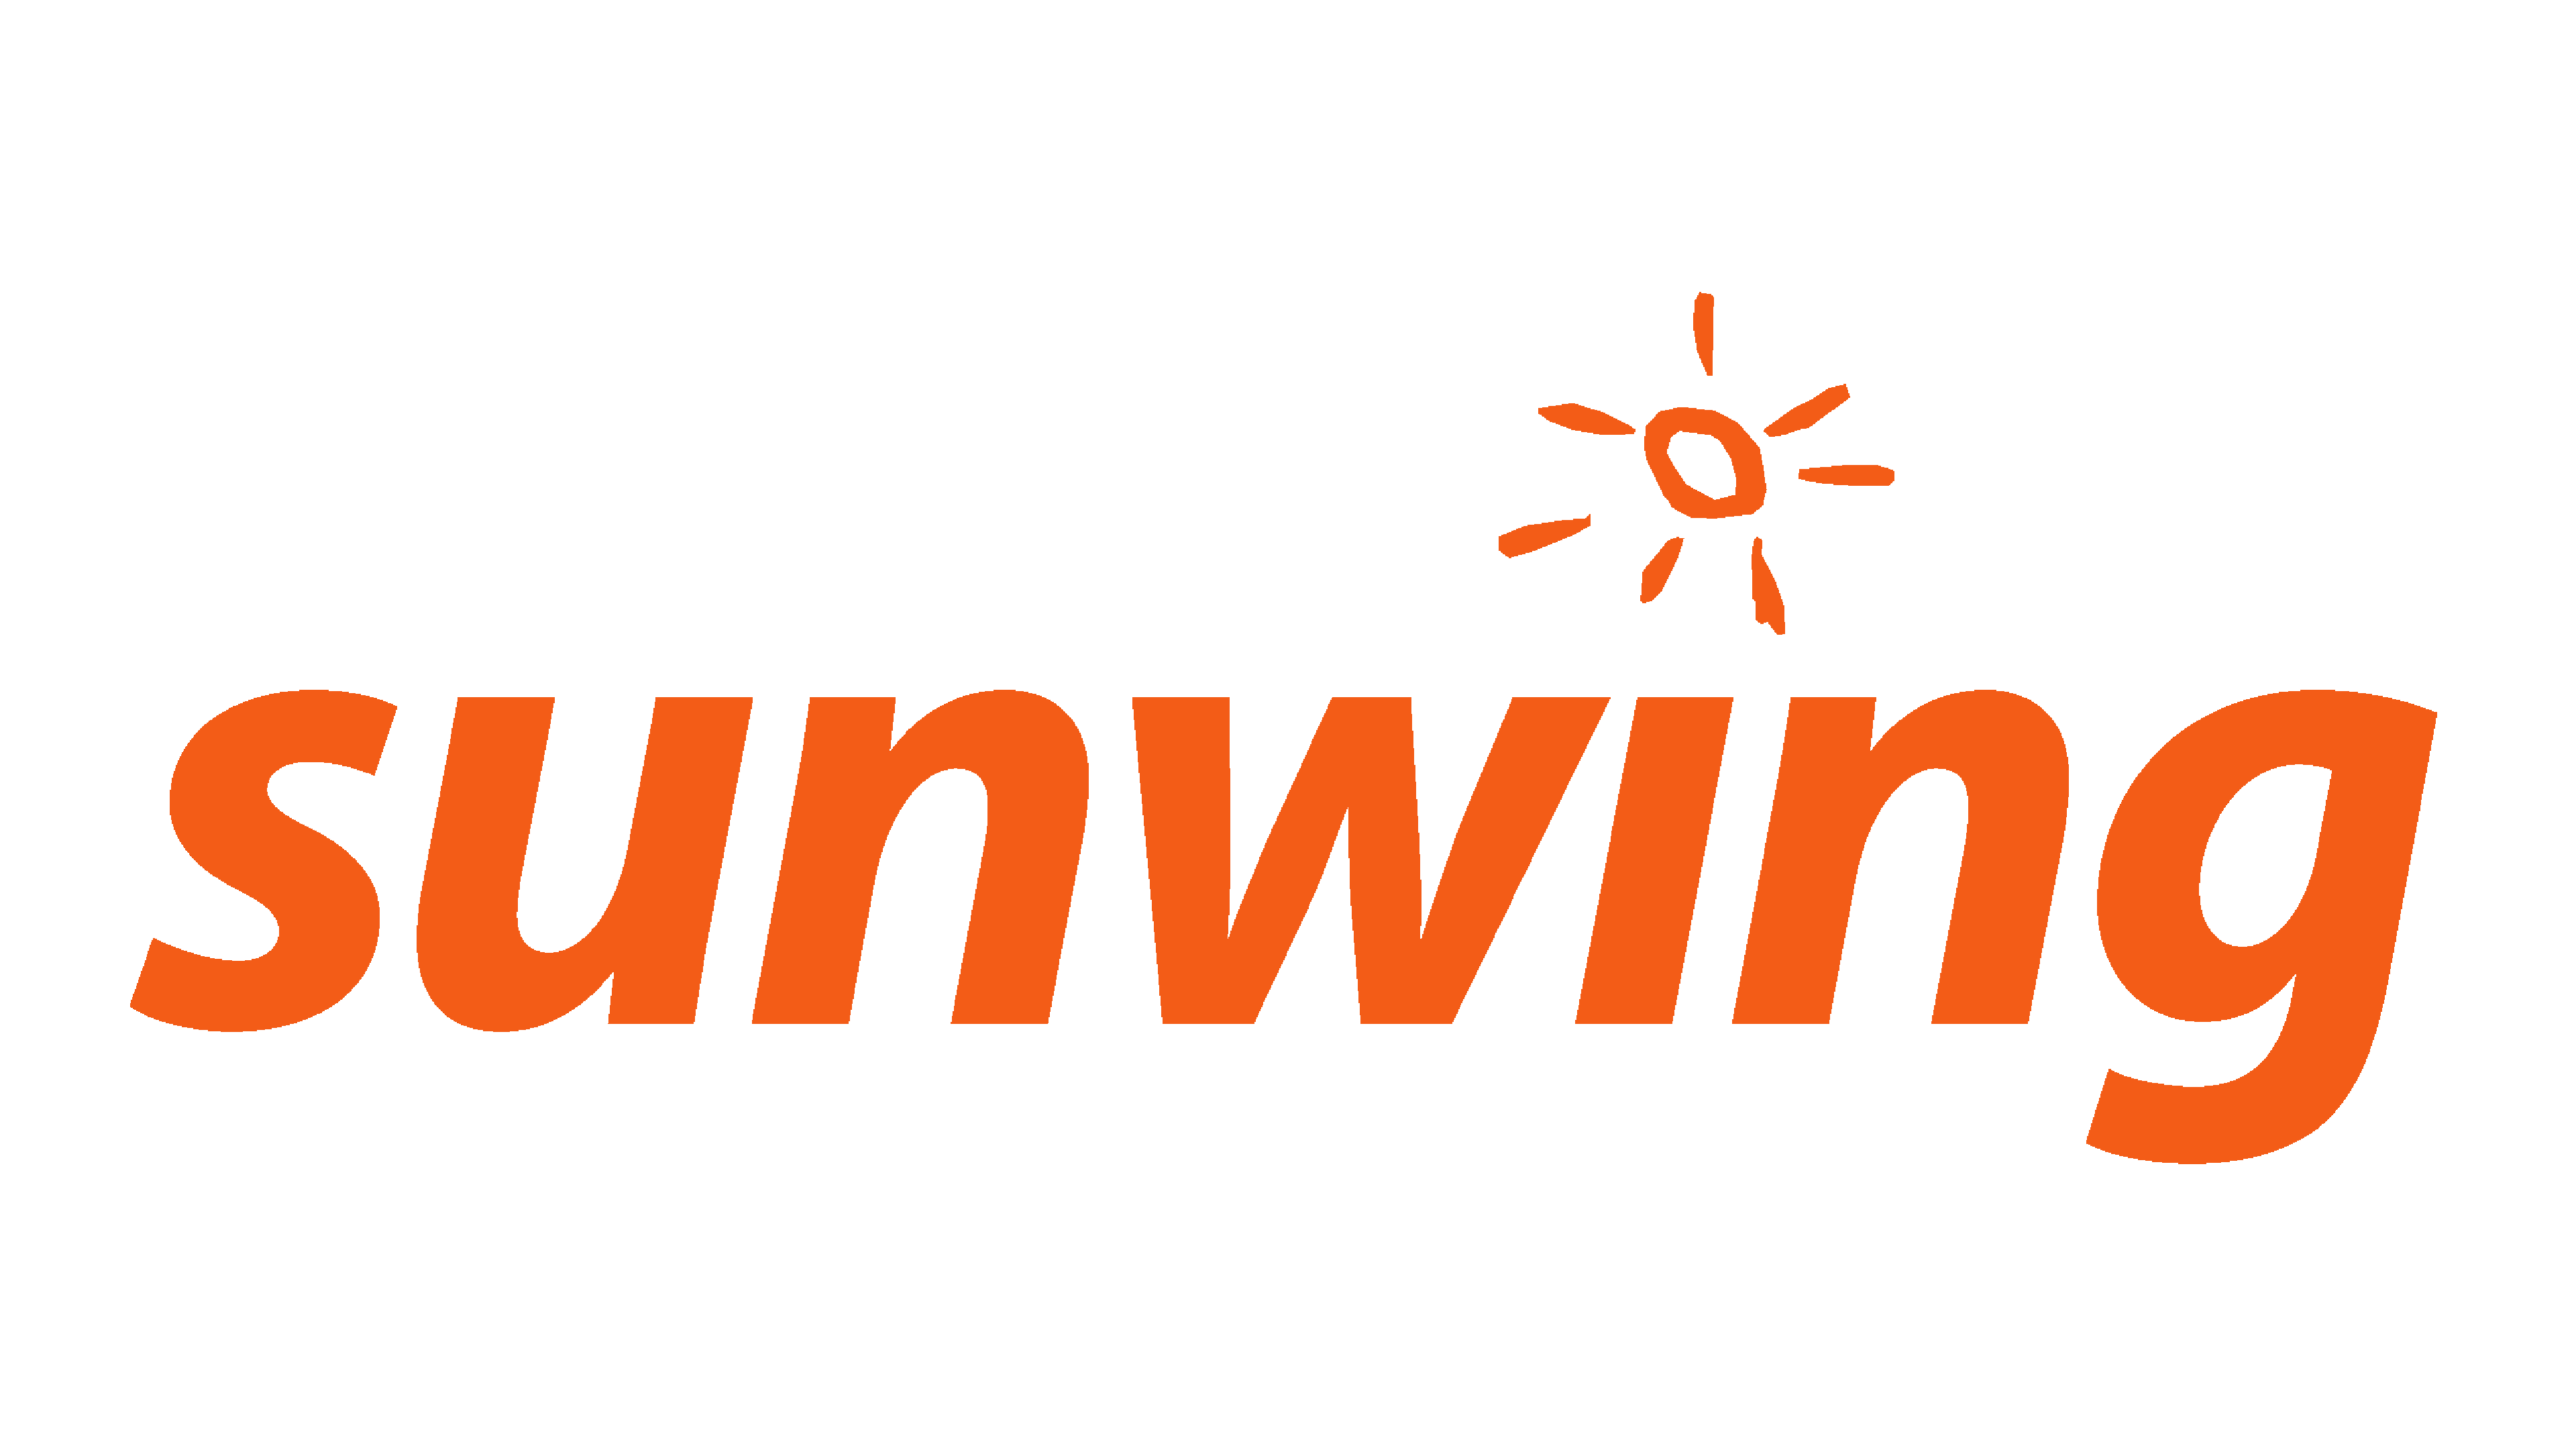 Logotipo de la aerolínea Sunwing Logo